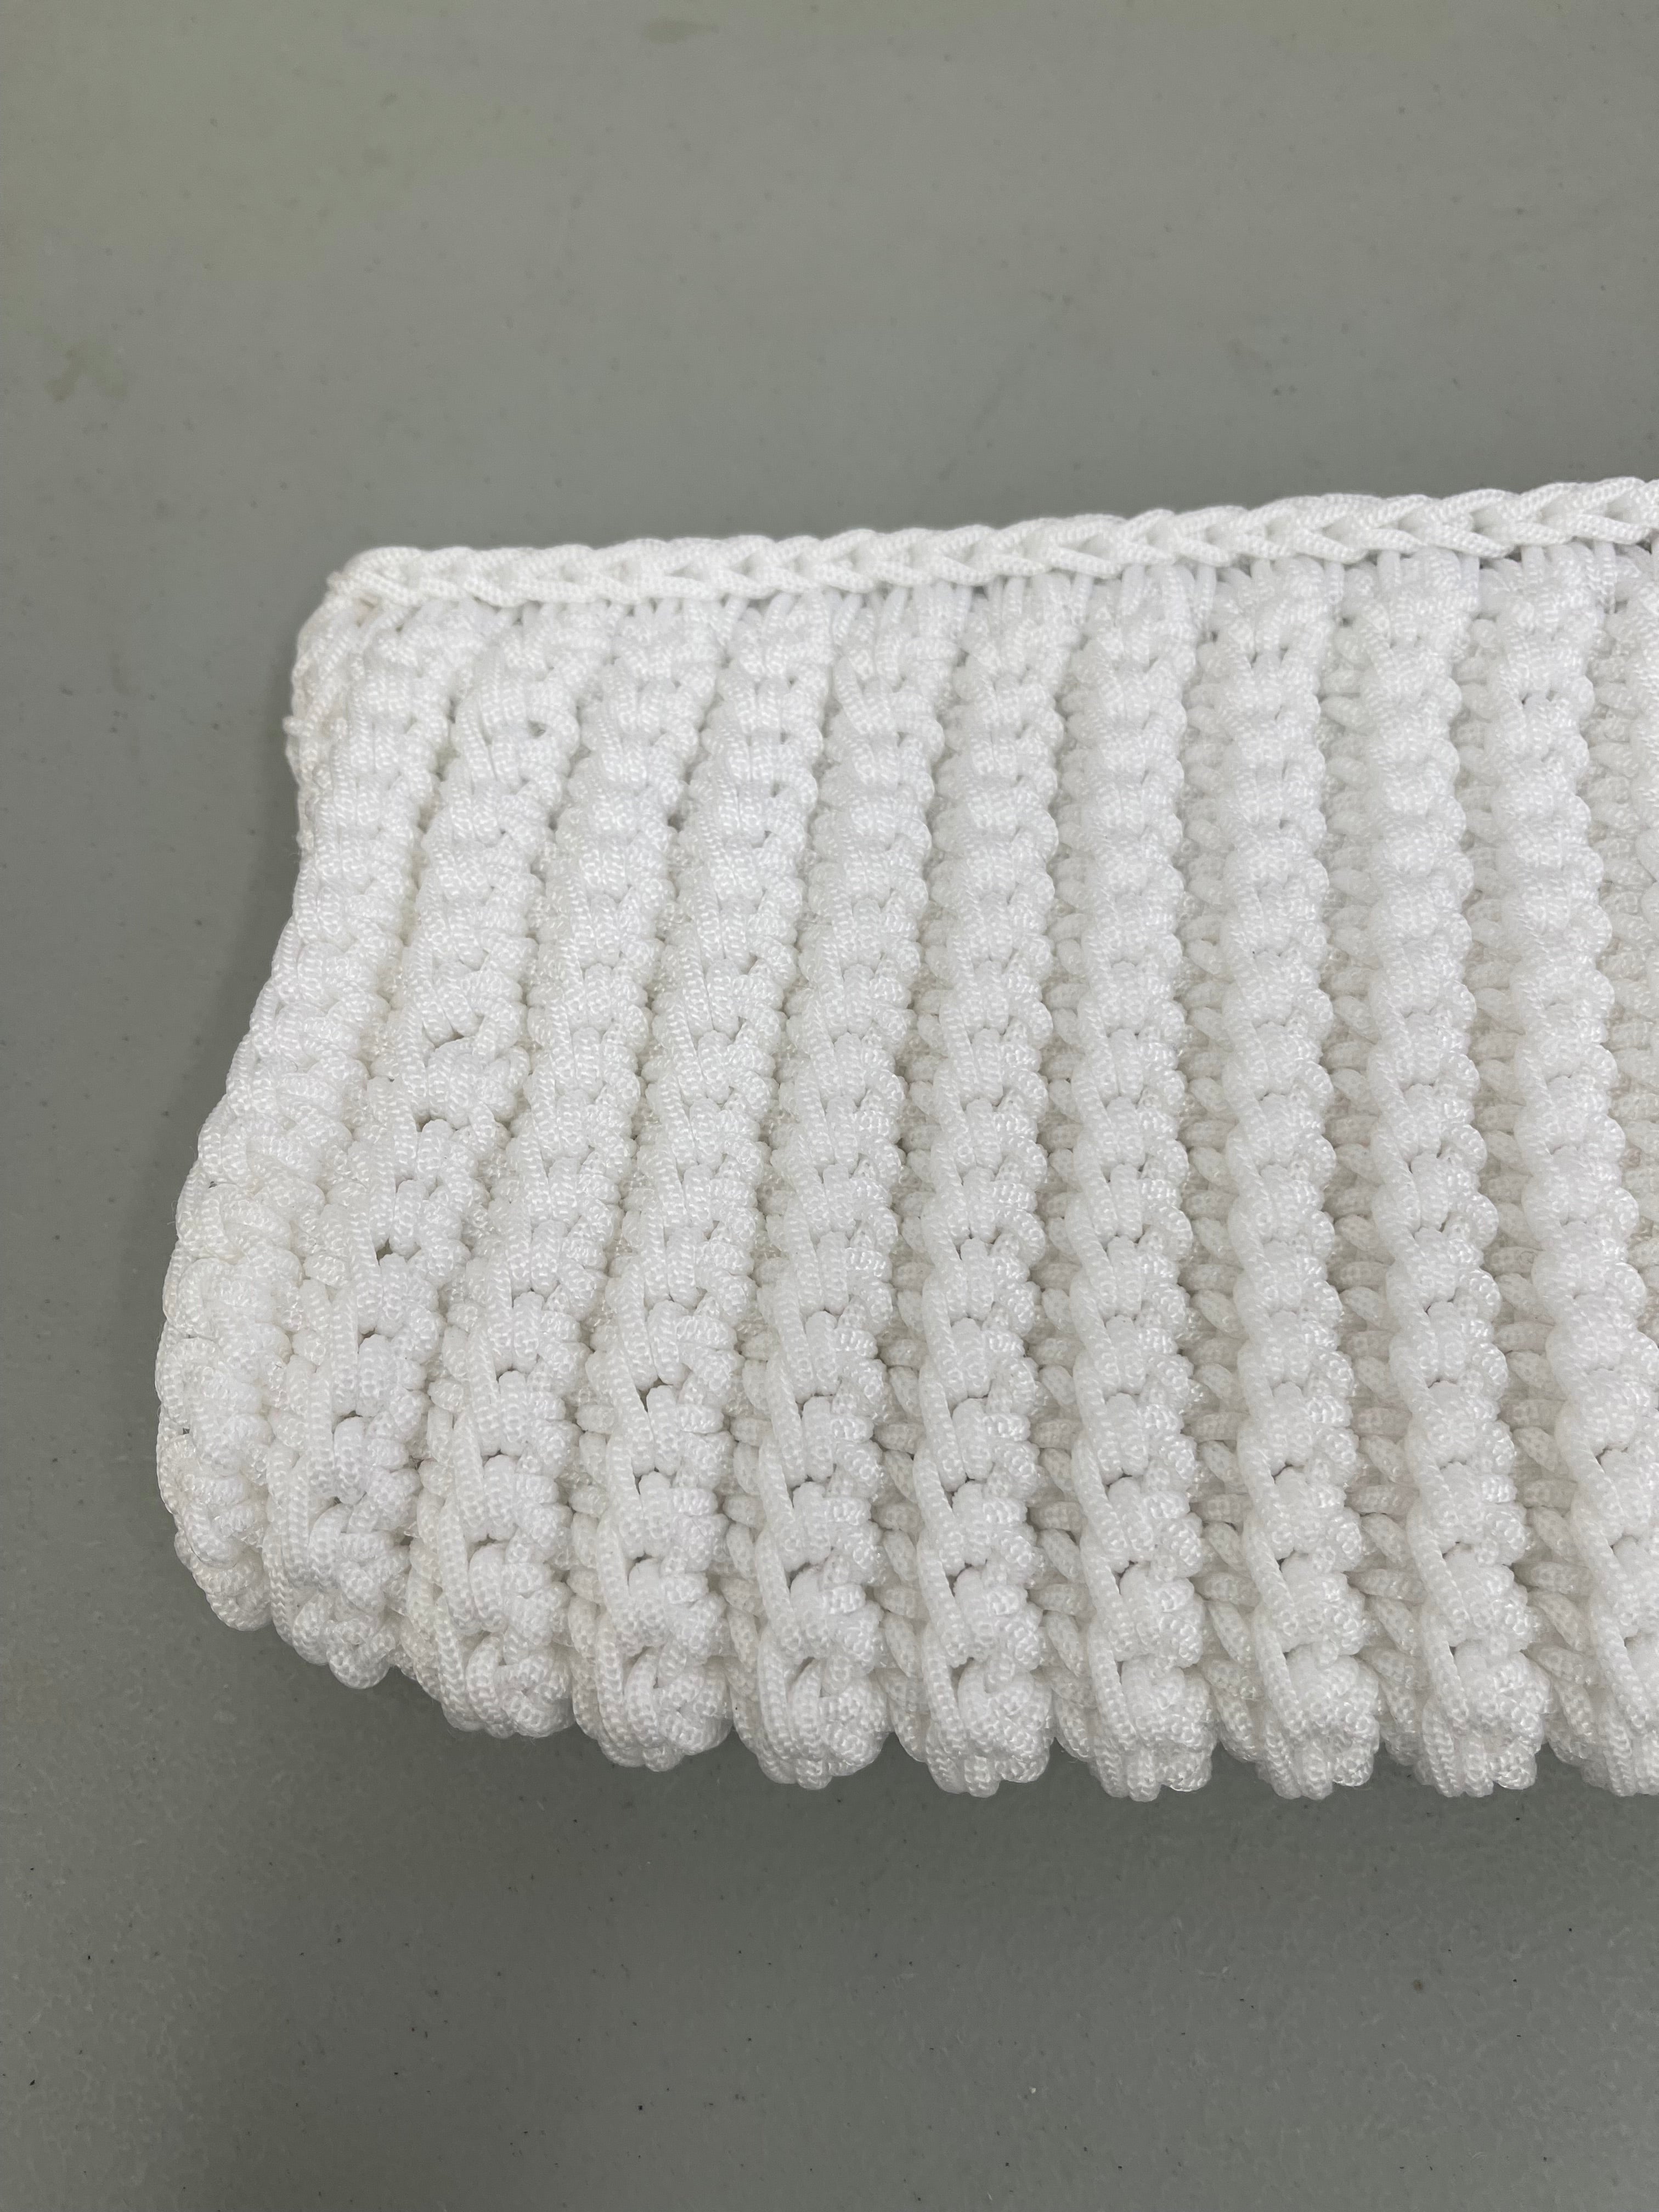 Crochet Clutch